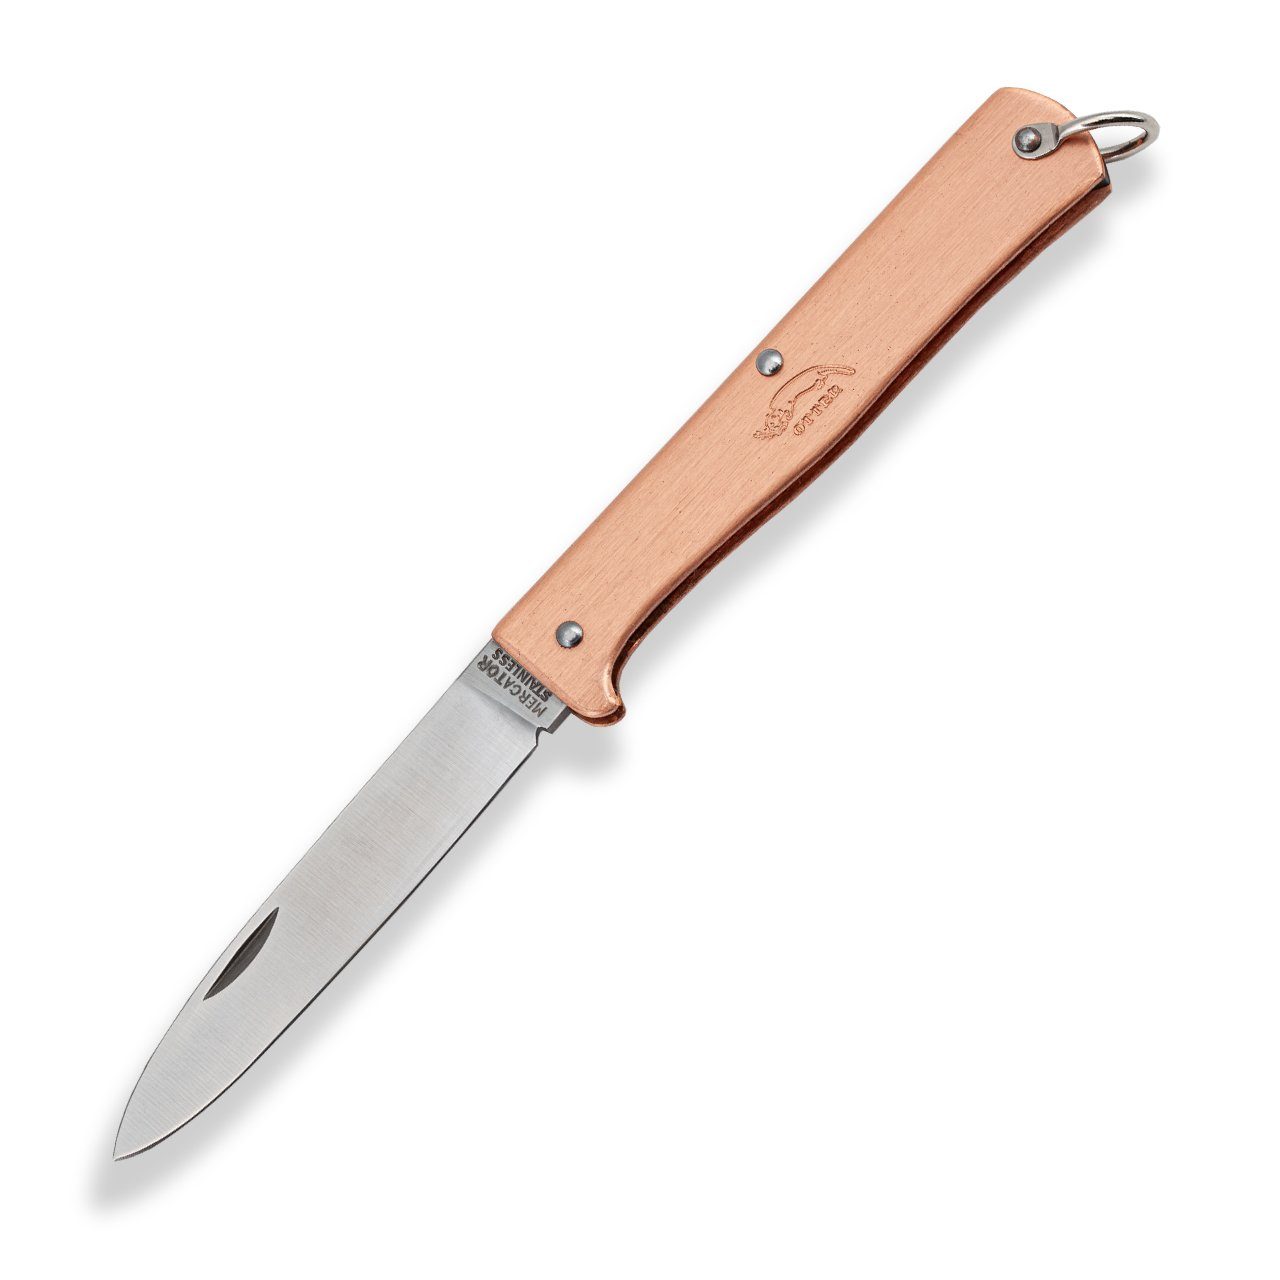 Otter Messer Taschenmesser Mercator-Messer klein Kupfer, Klinge rostfrei, Slipjoint